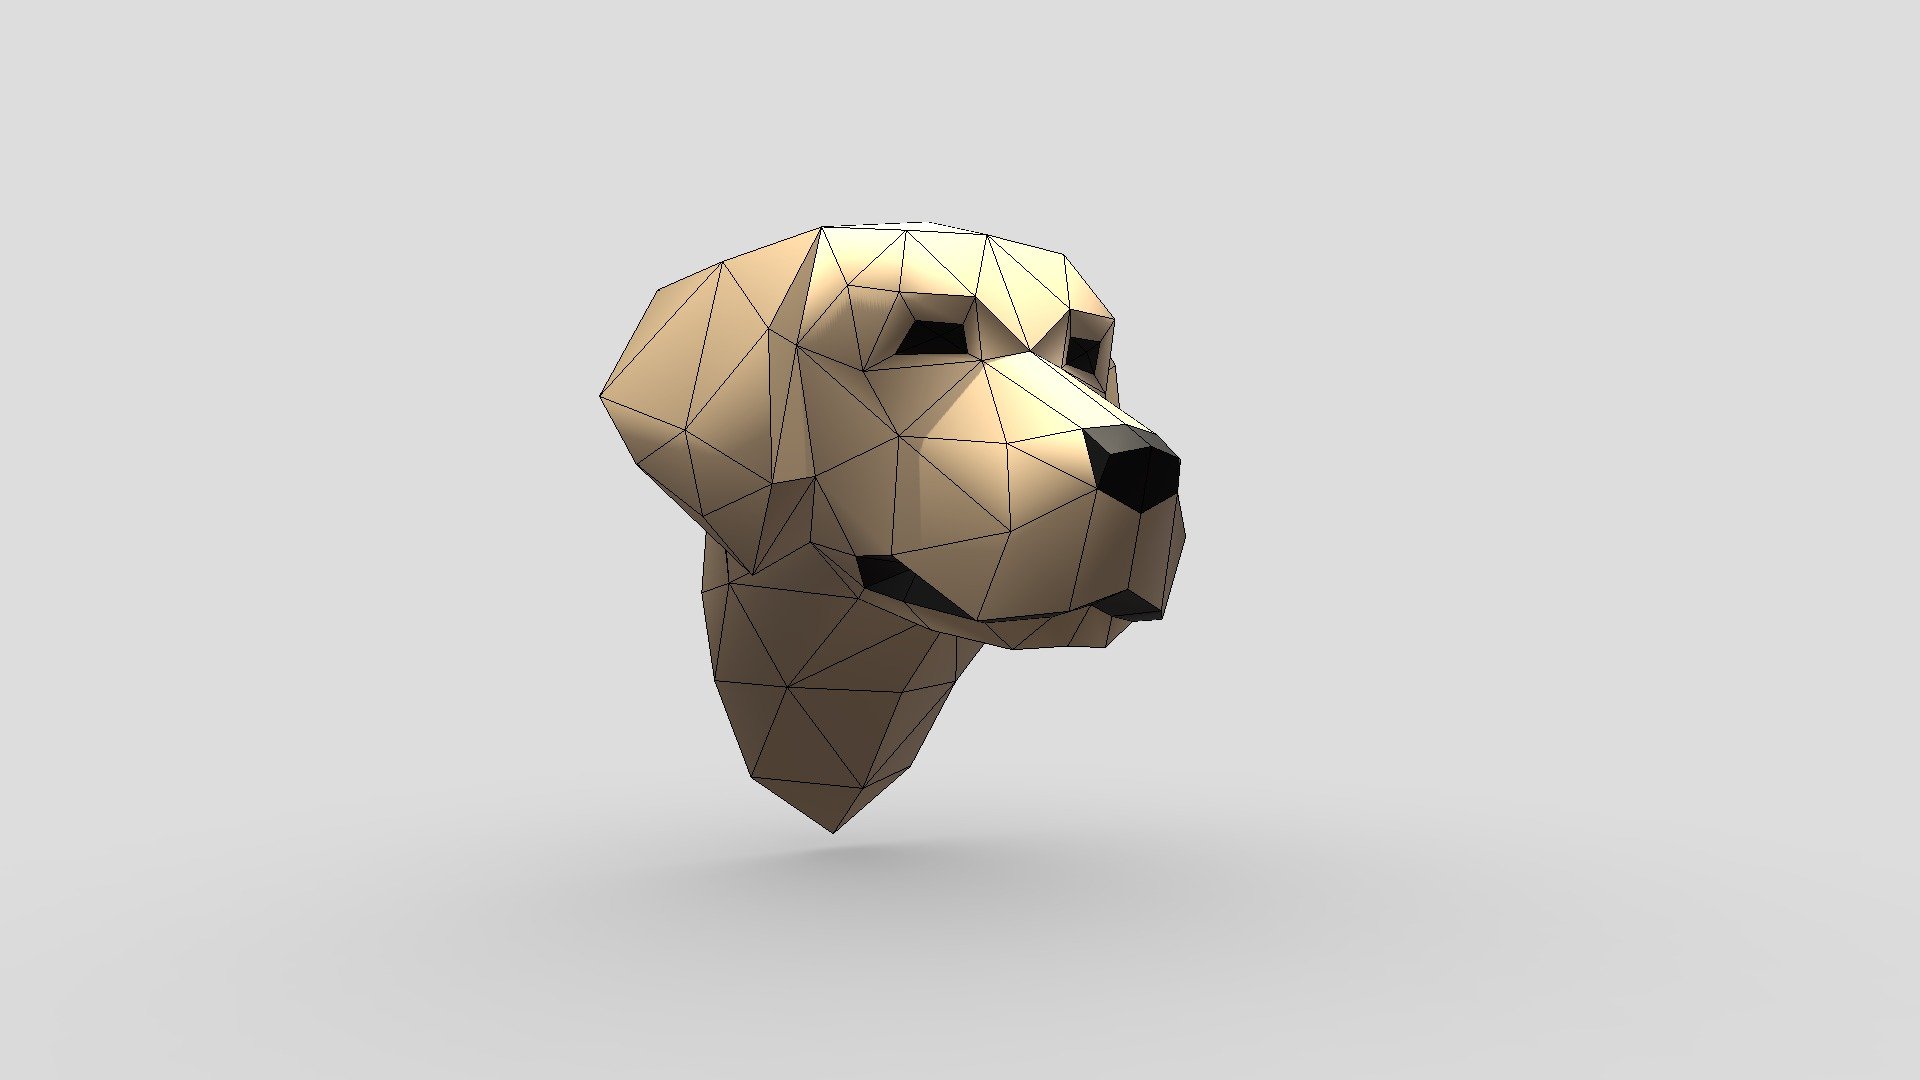 Cabeza de perro estilo trofeo , modelo lowpoly.
Recomendado para pepakura , impresión 3D - Labrador - 3D model by vanneyepes6 3d model